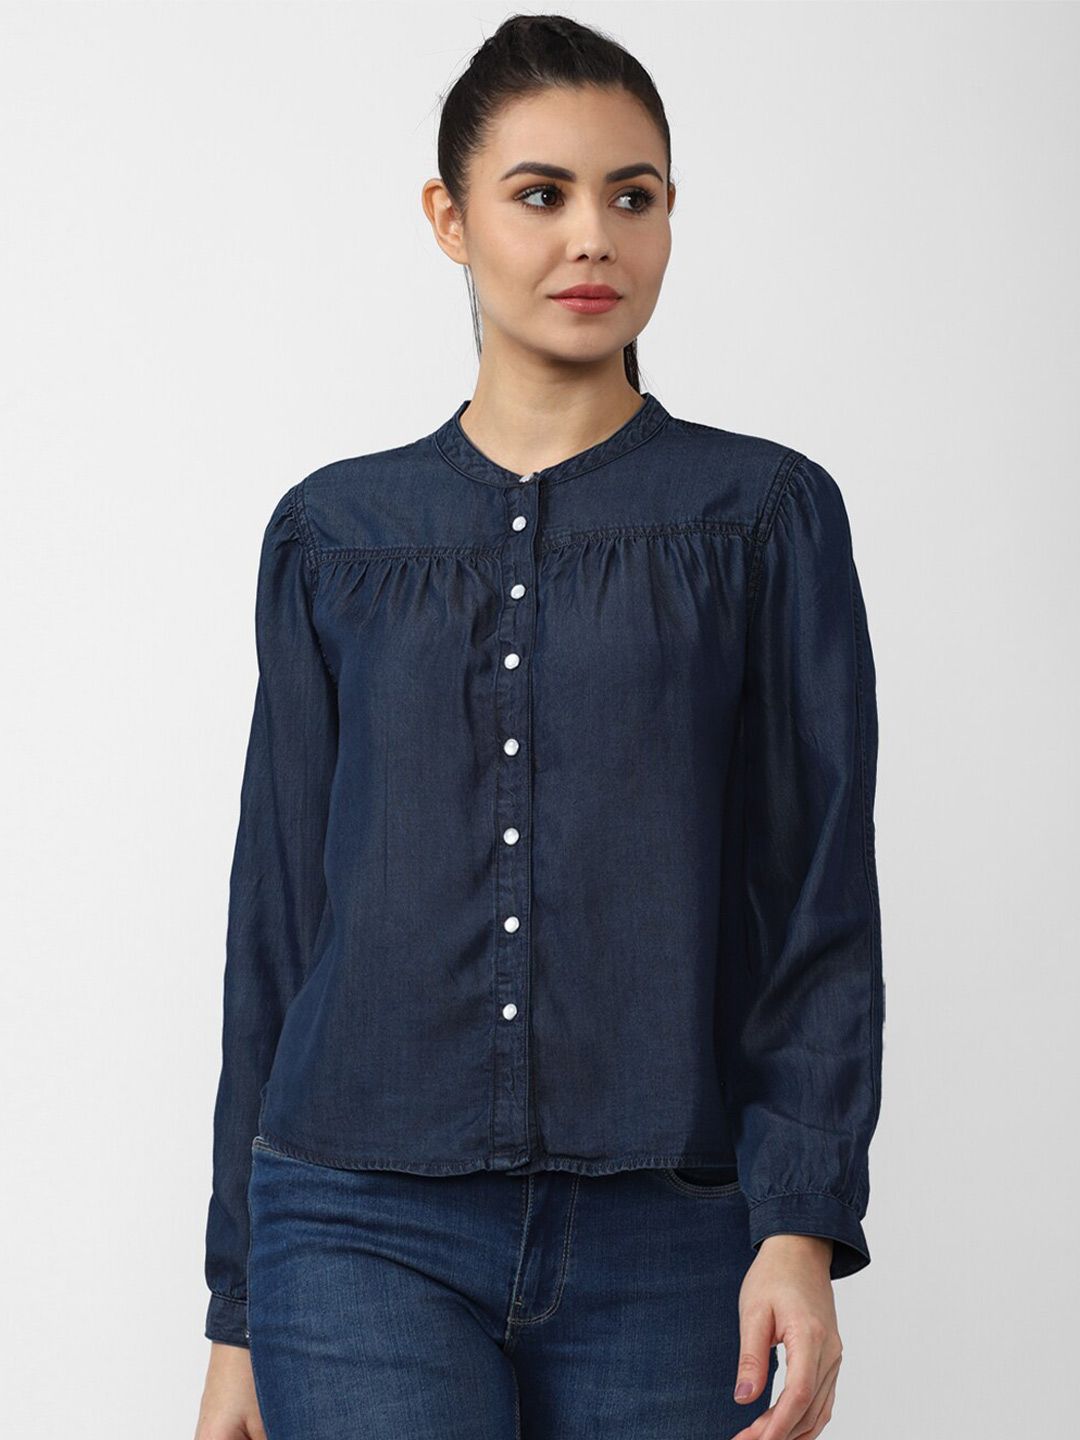 Van Heusen Woman Navy Blue Mandarin Collar Denim Shirt Style Top Price in India